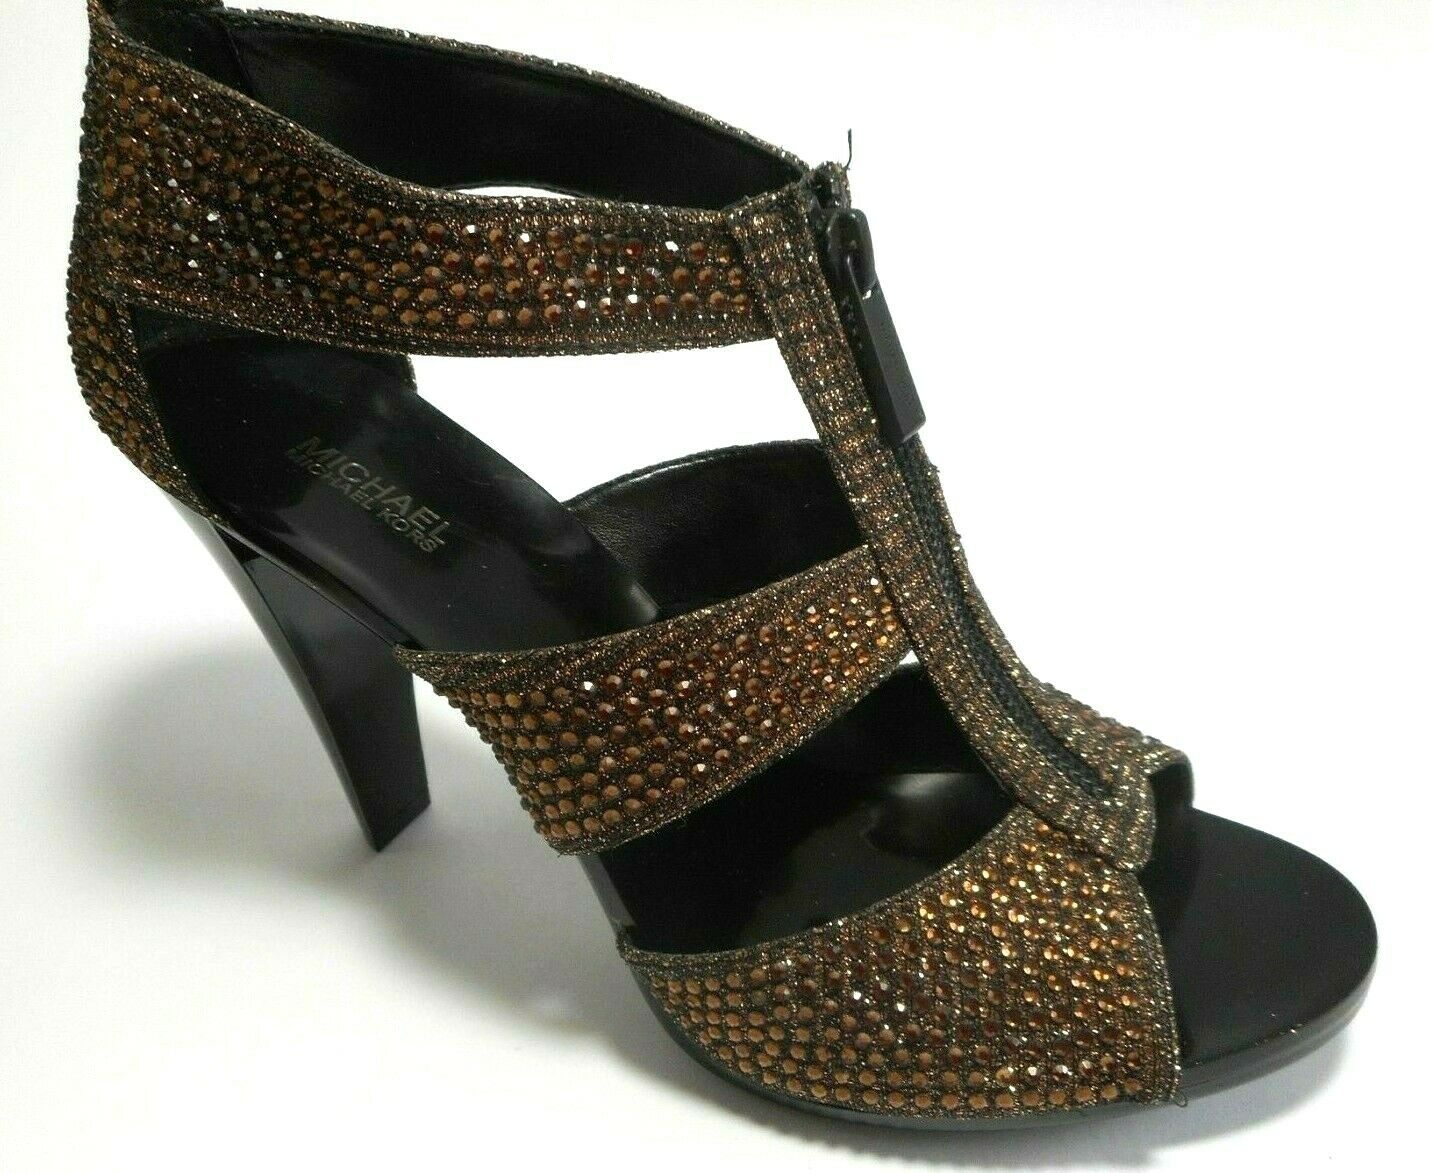 BRAND NEW MICHAEL KORS Size 9.5M DK Bronze Jewel High Heel Pumps Sandal Shoes